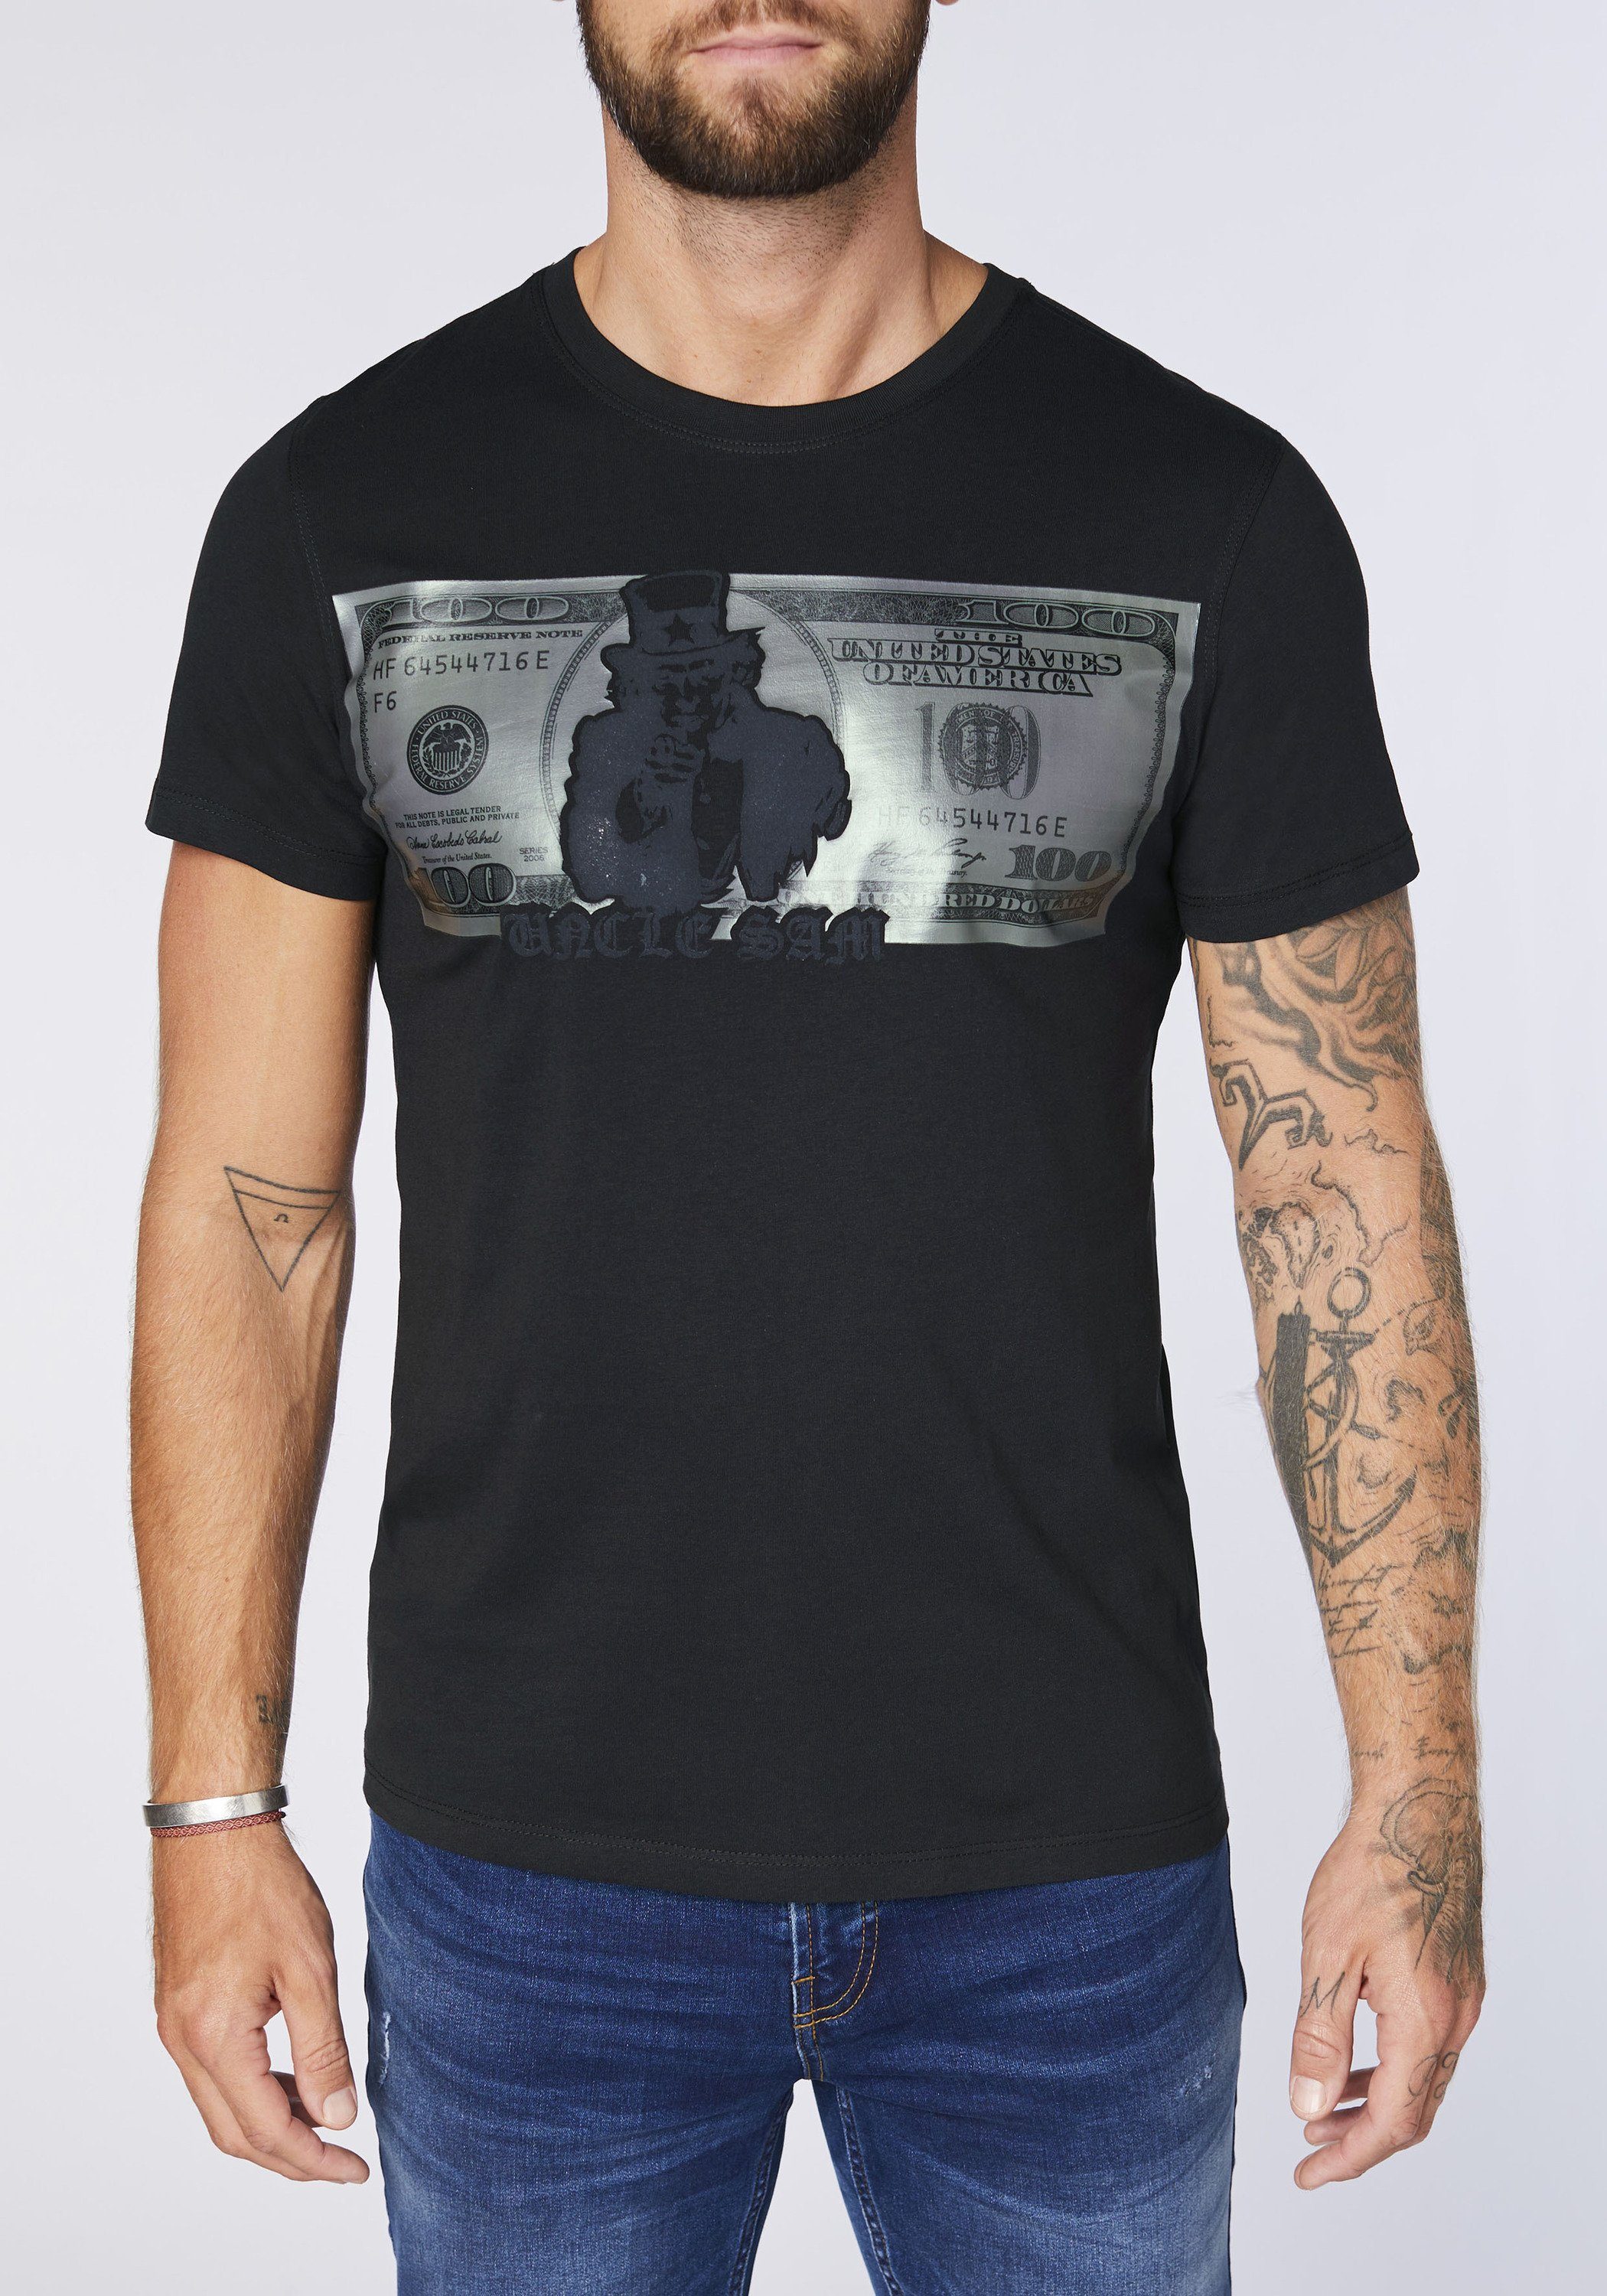 Uncle Sam Print-Shirt Black 19-3911 Frontprint Deep mit